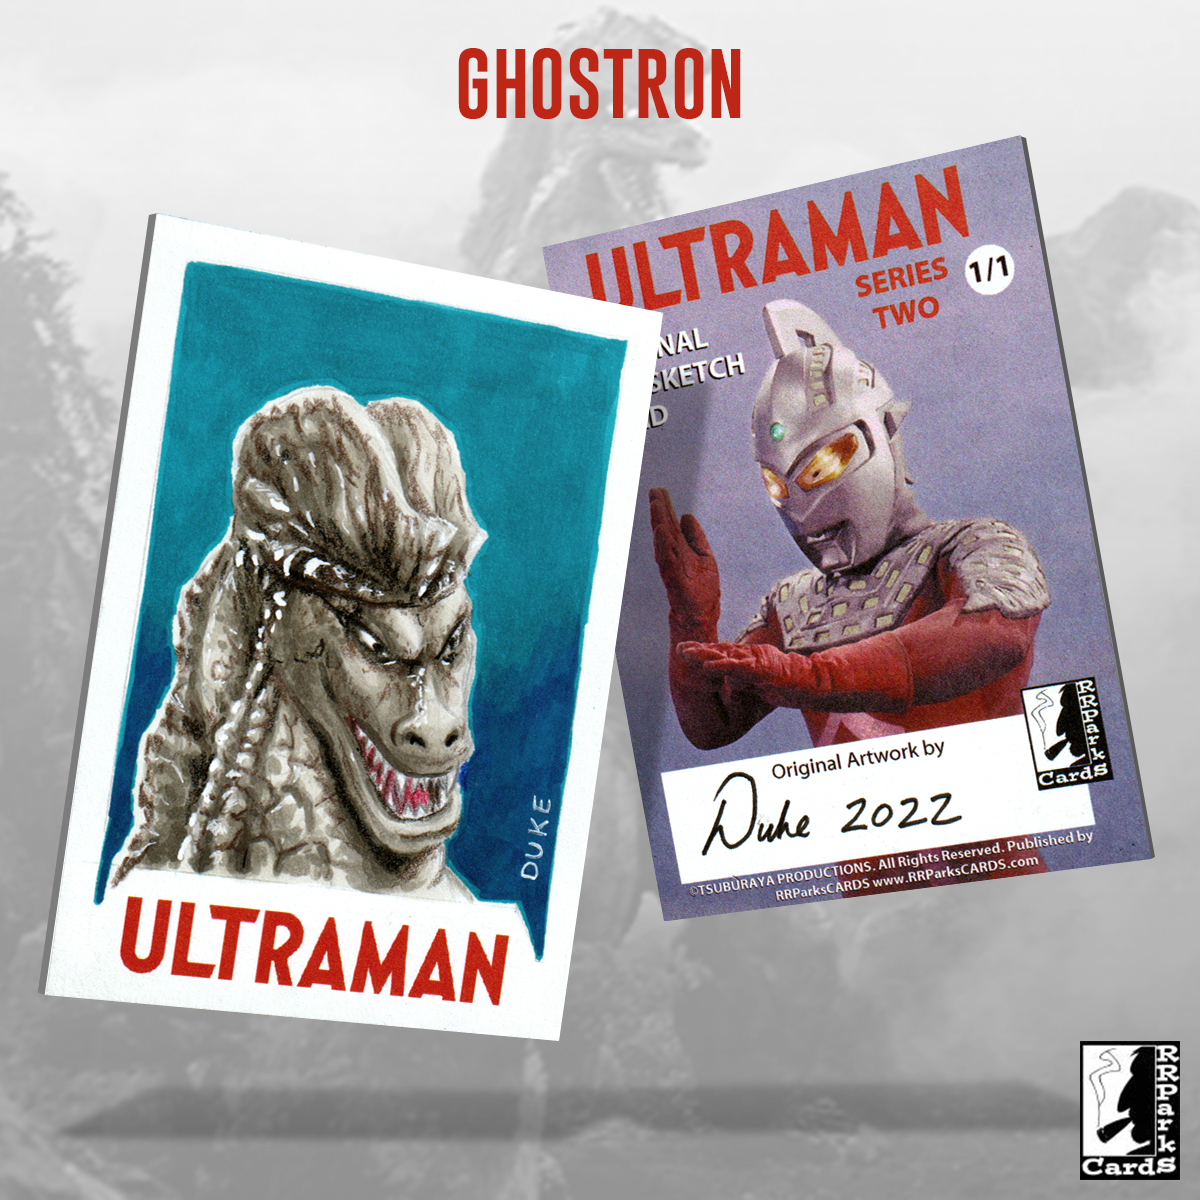 Ultraman Series 2 Ghostron Sketch Card by Duke